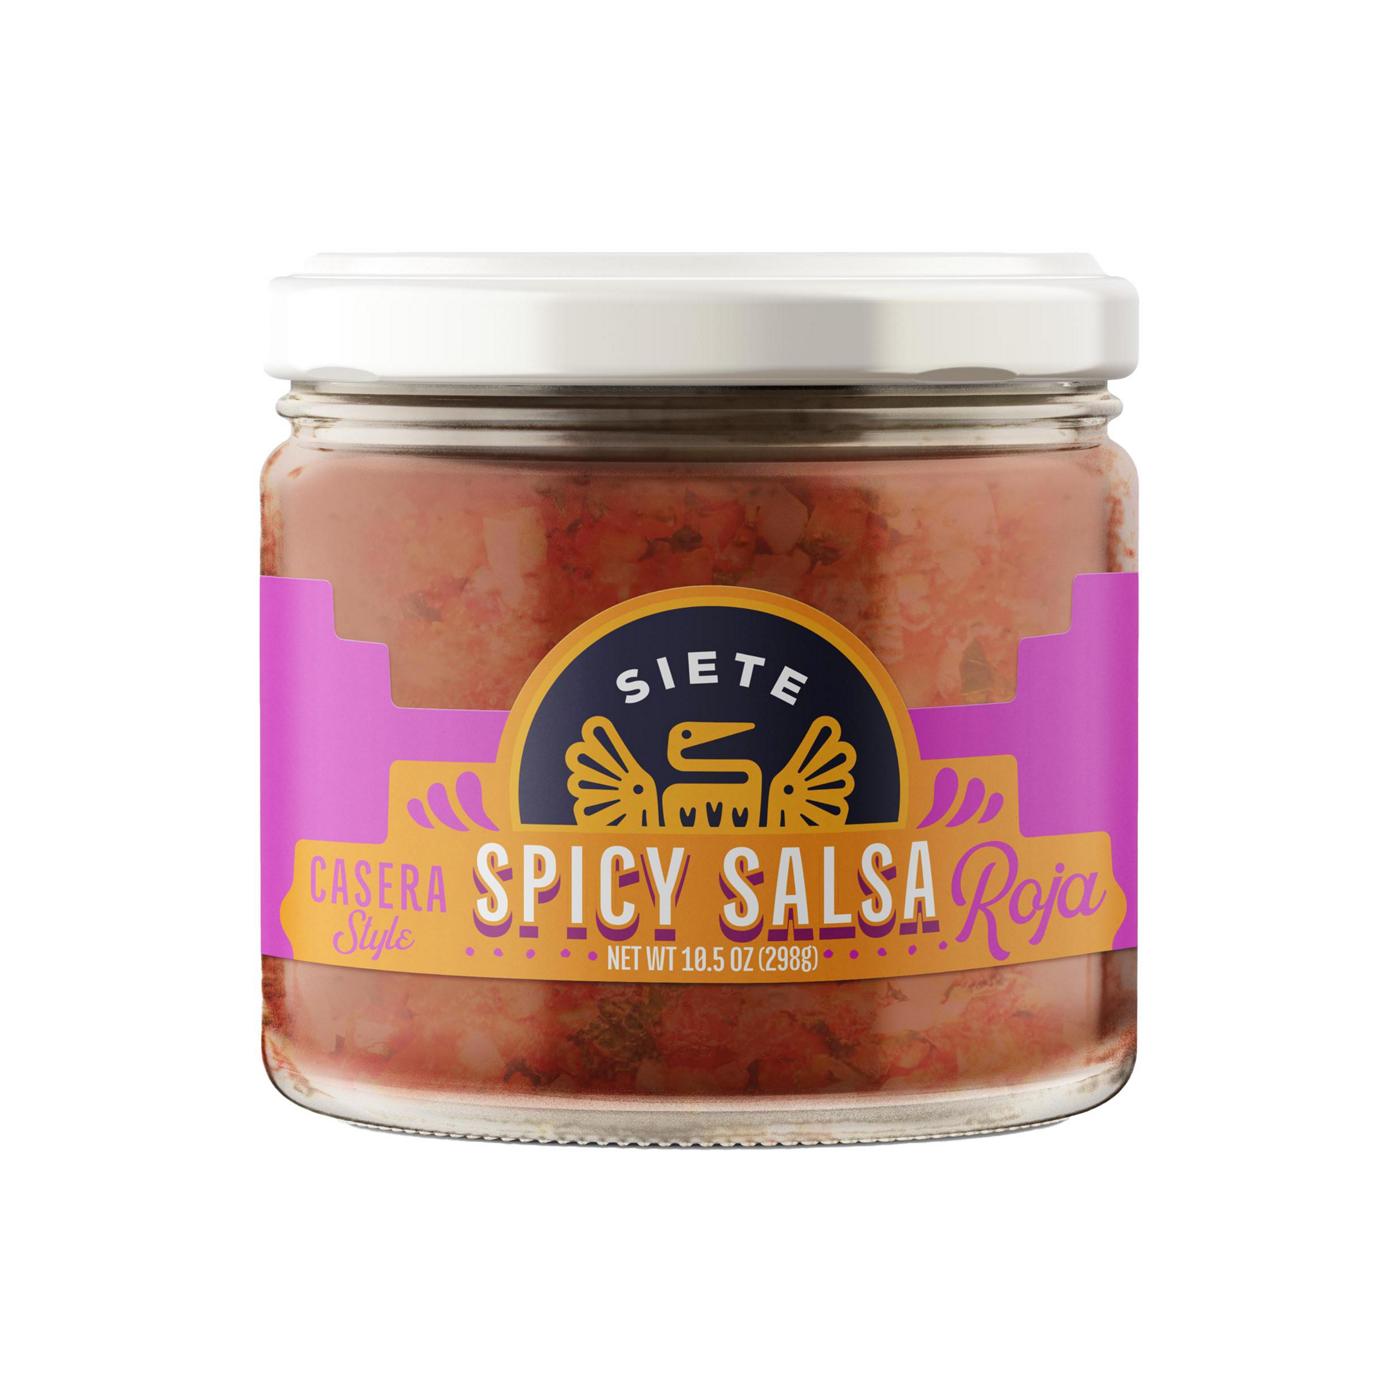 Siete Casera Style Spicy Salsa Roja; image 1 of 4